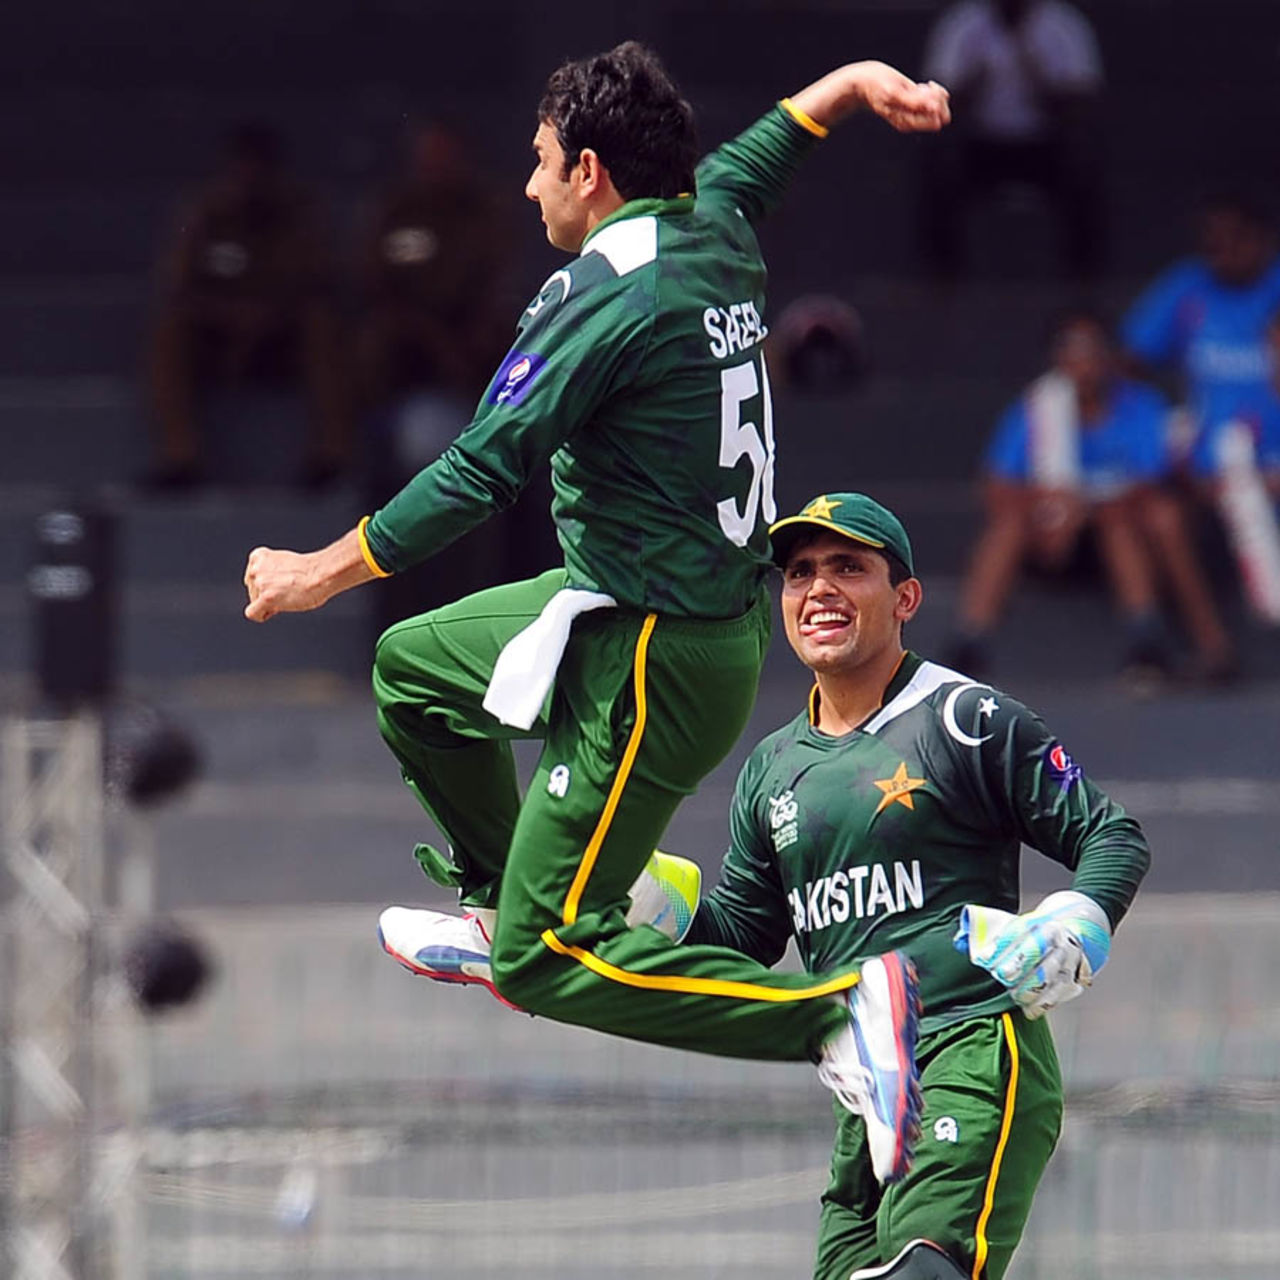 Saeed Ajmal celebrates after taking a wicket, India v Pakistan, World Twenty20 warm-ups, Colombo, September 17, 2012